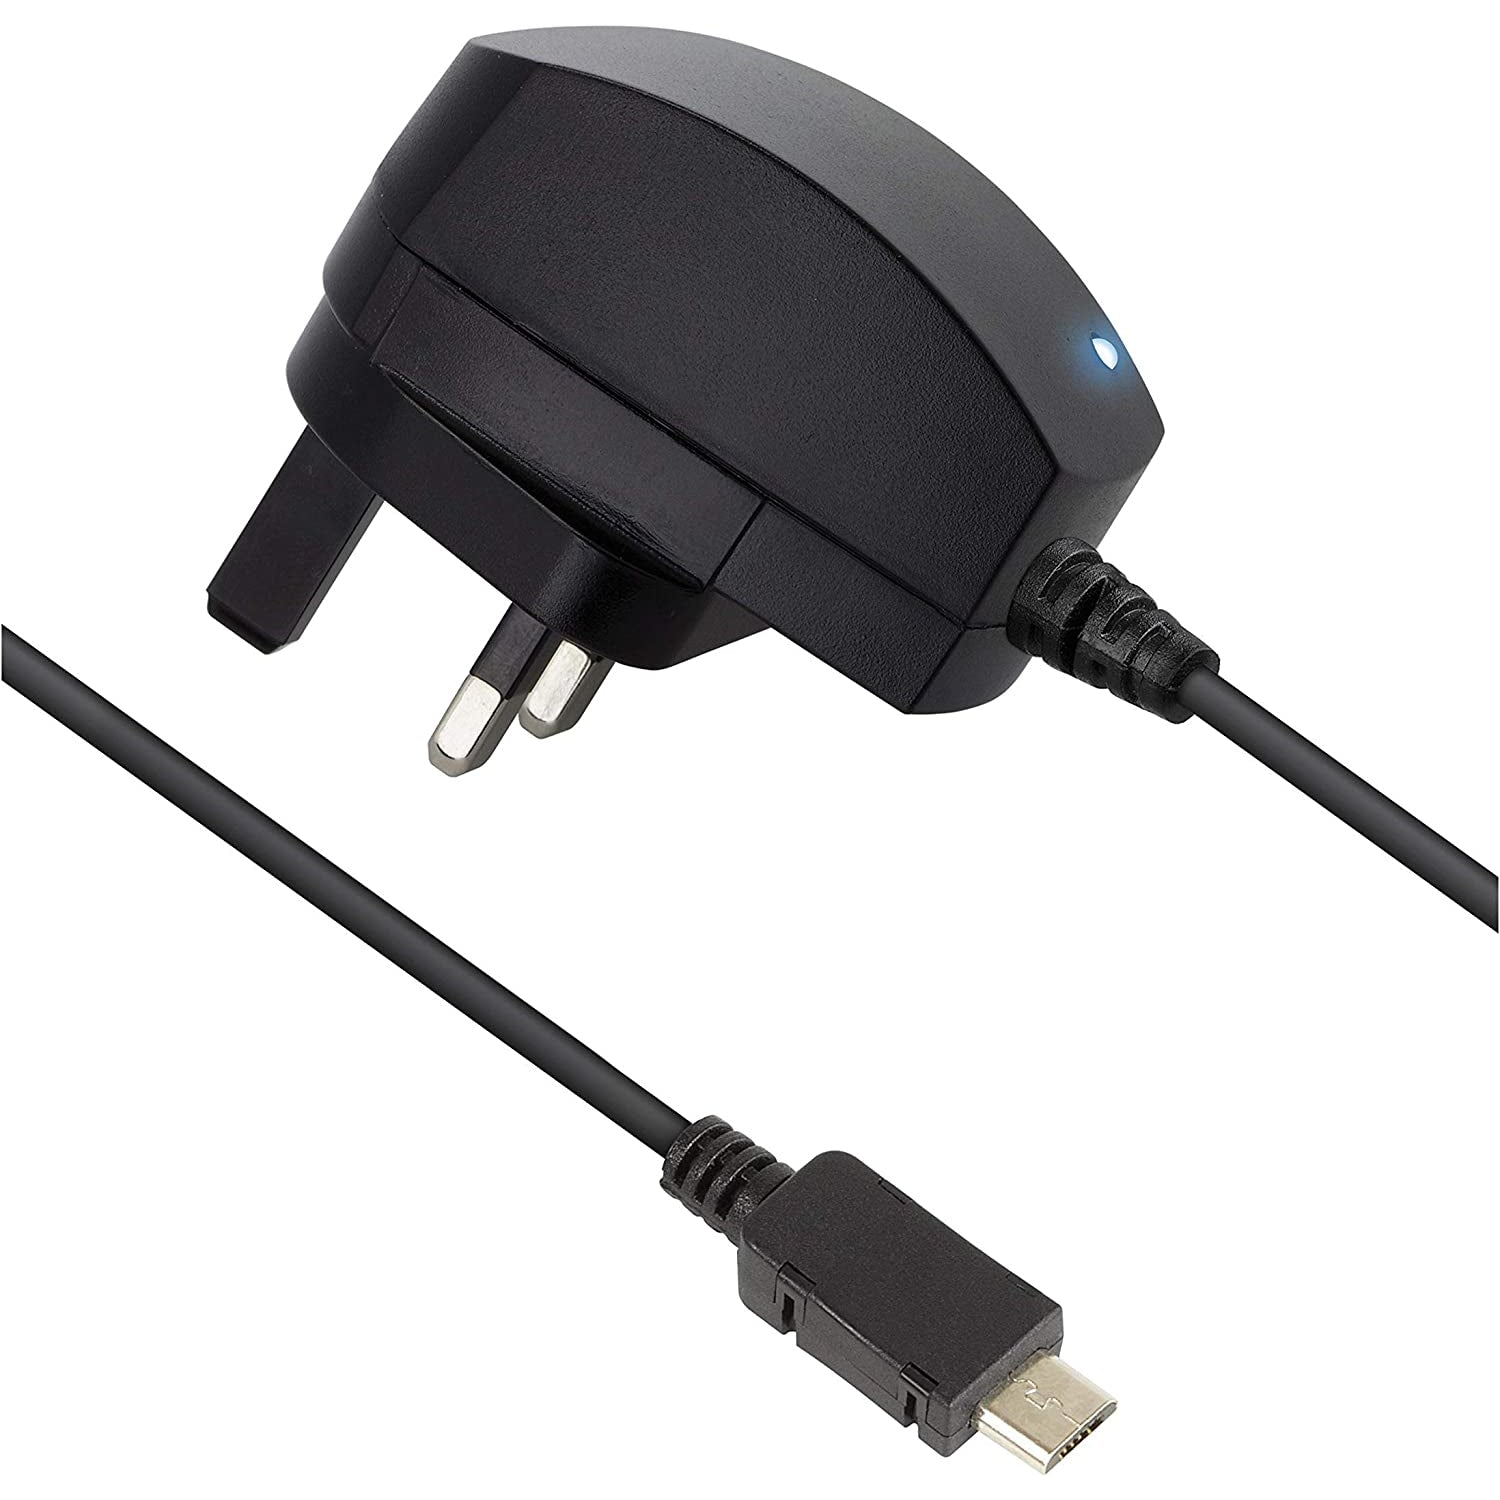 Kit Micro USB Mains Charger for Micro USB Smartphones